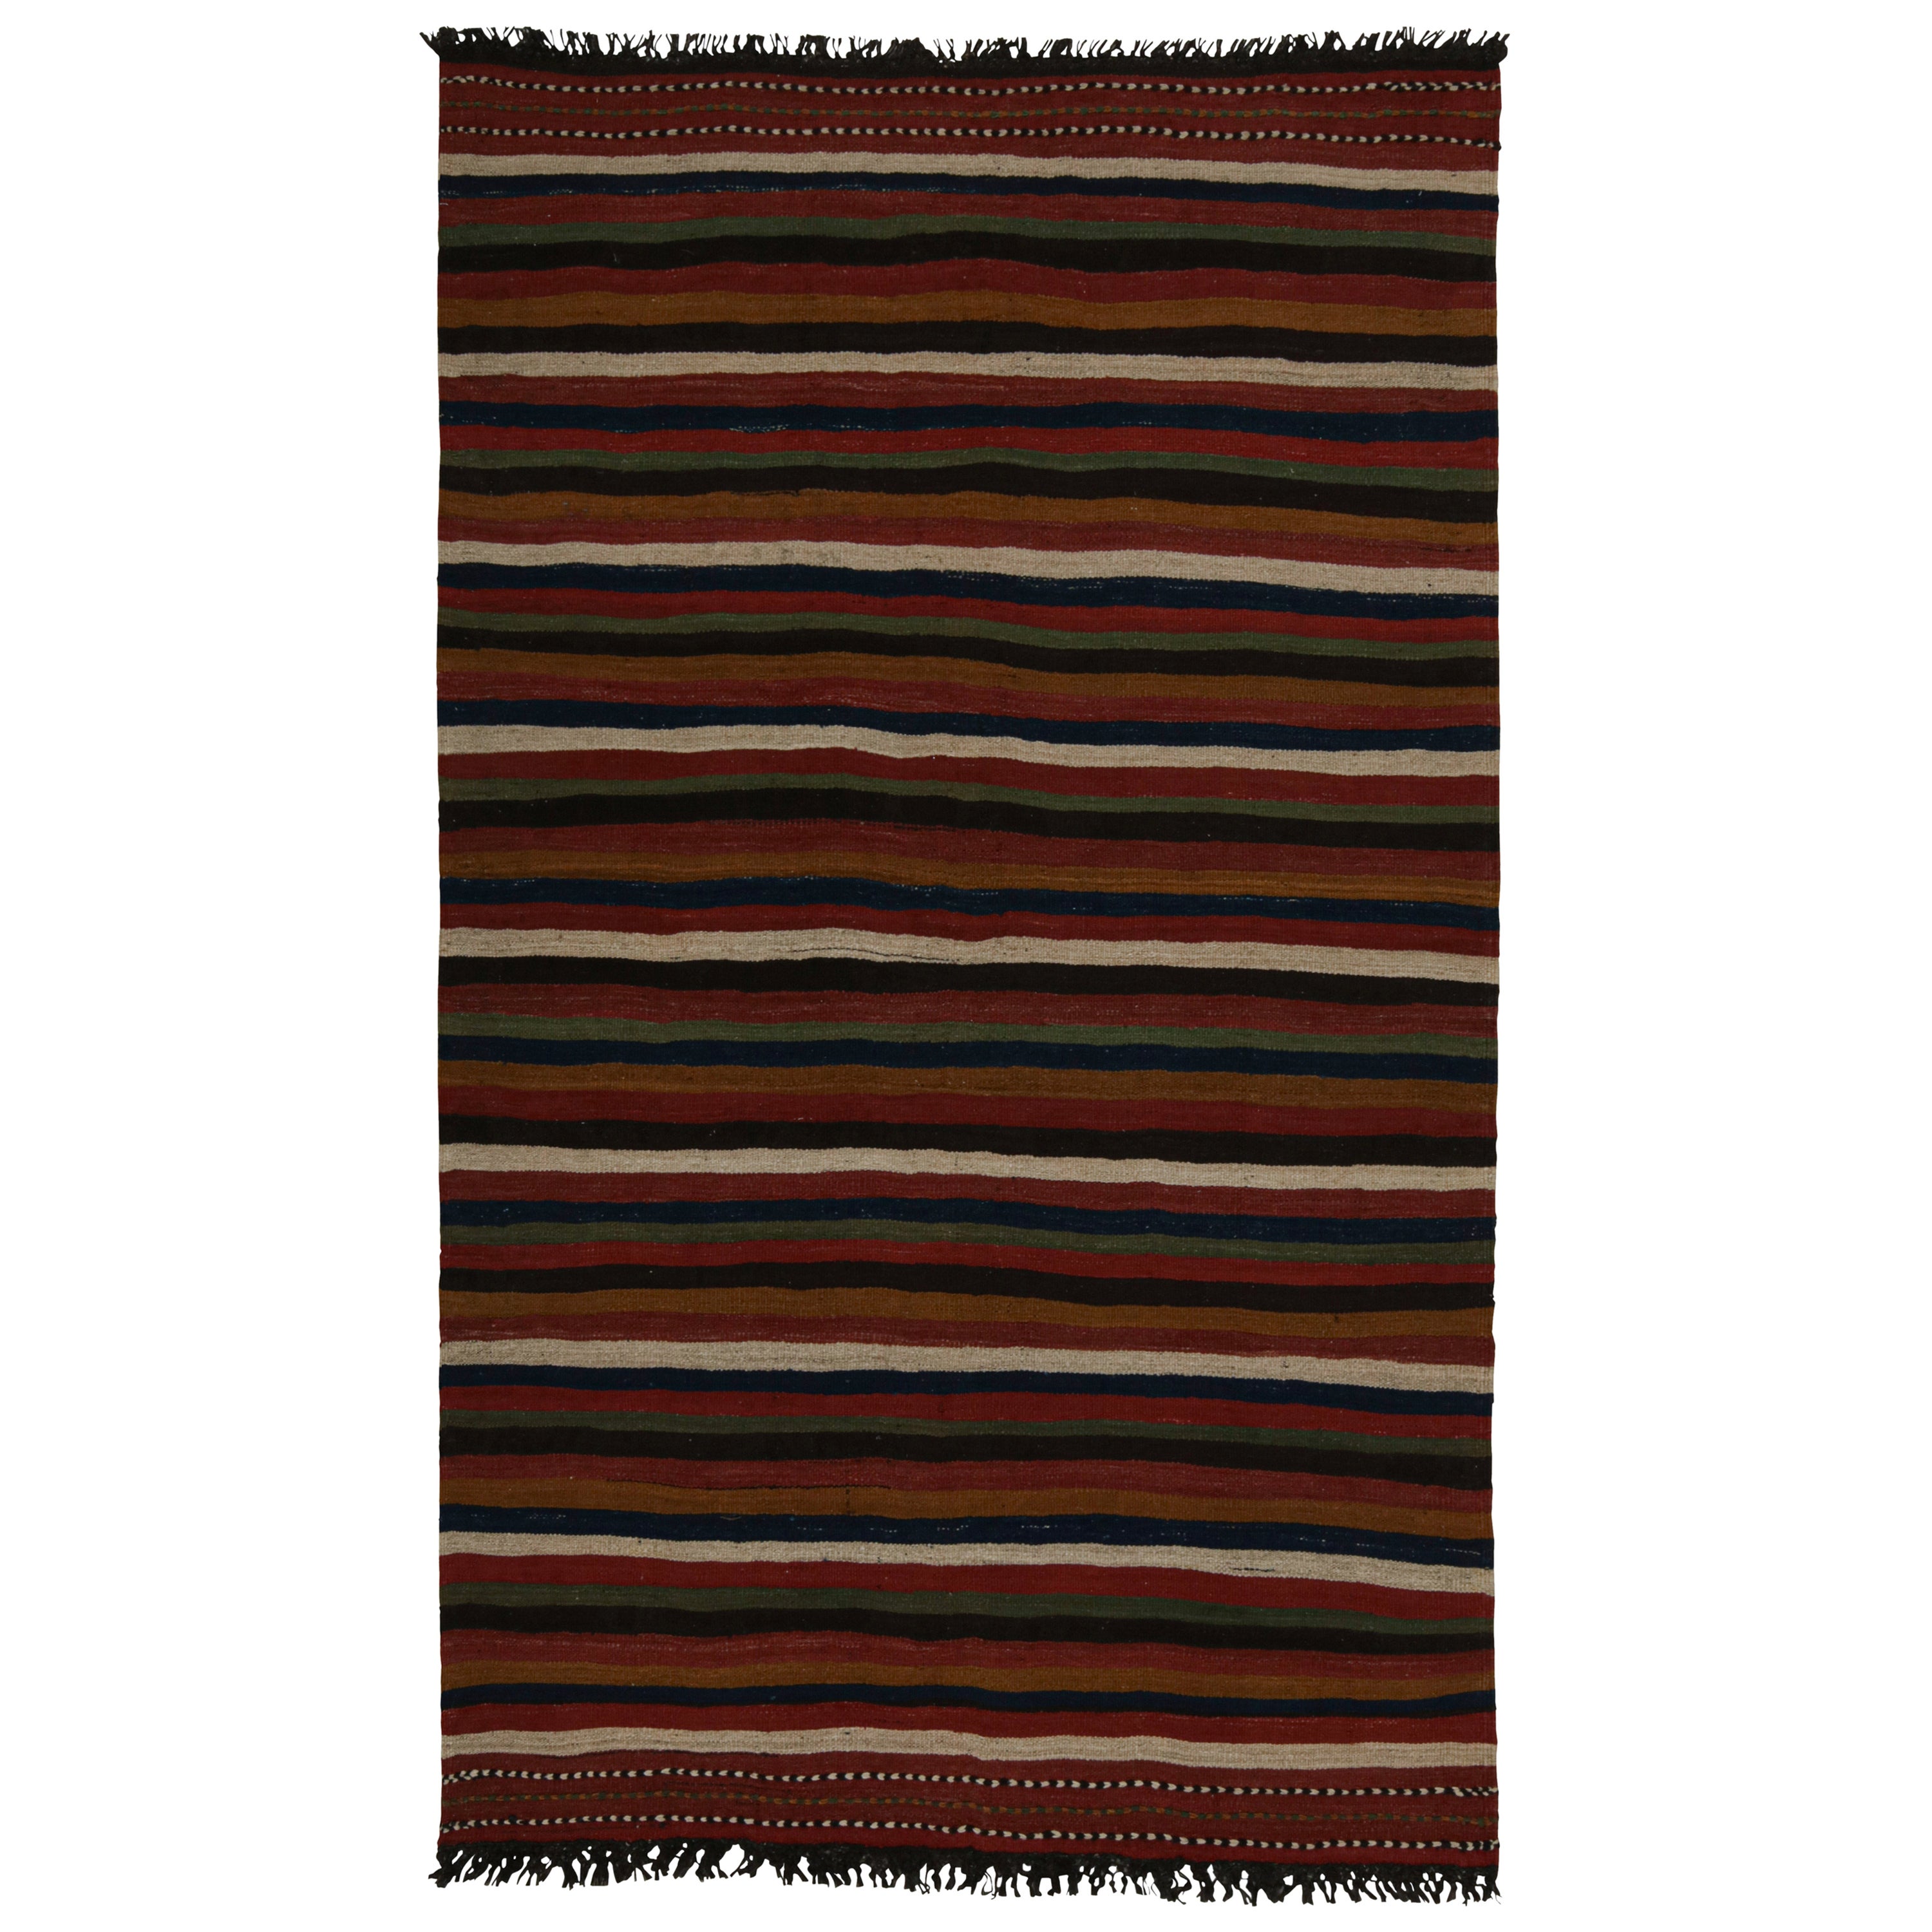 Vintage Afghani tribal Kilim rug, with Stripes, from Rug & Kilim